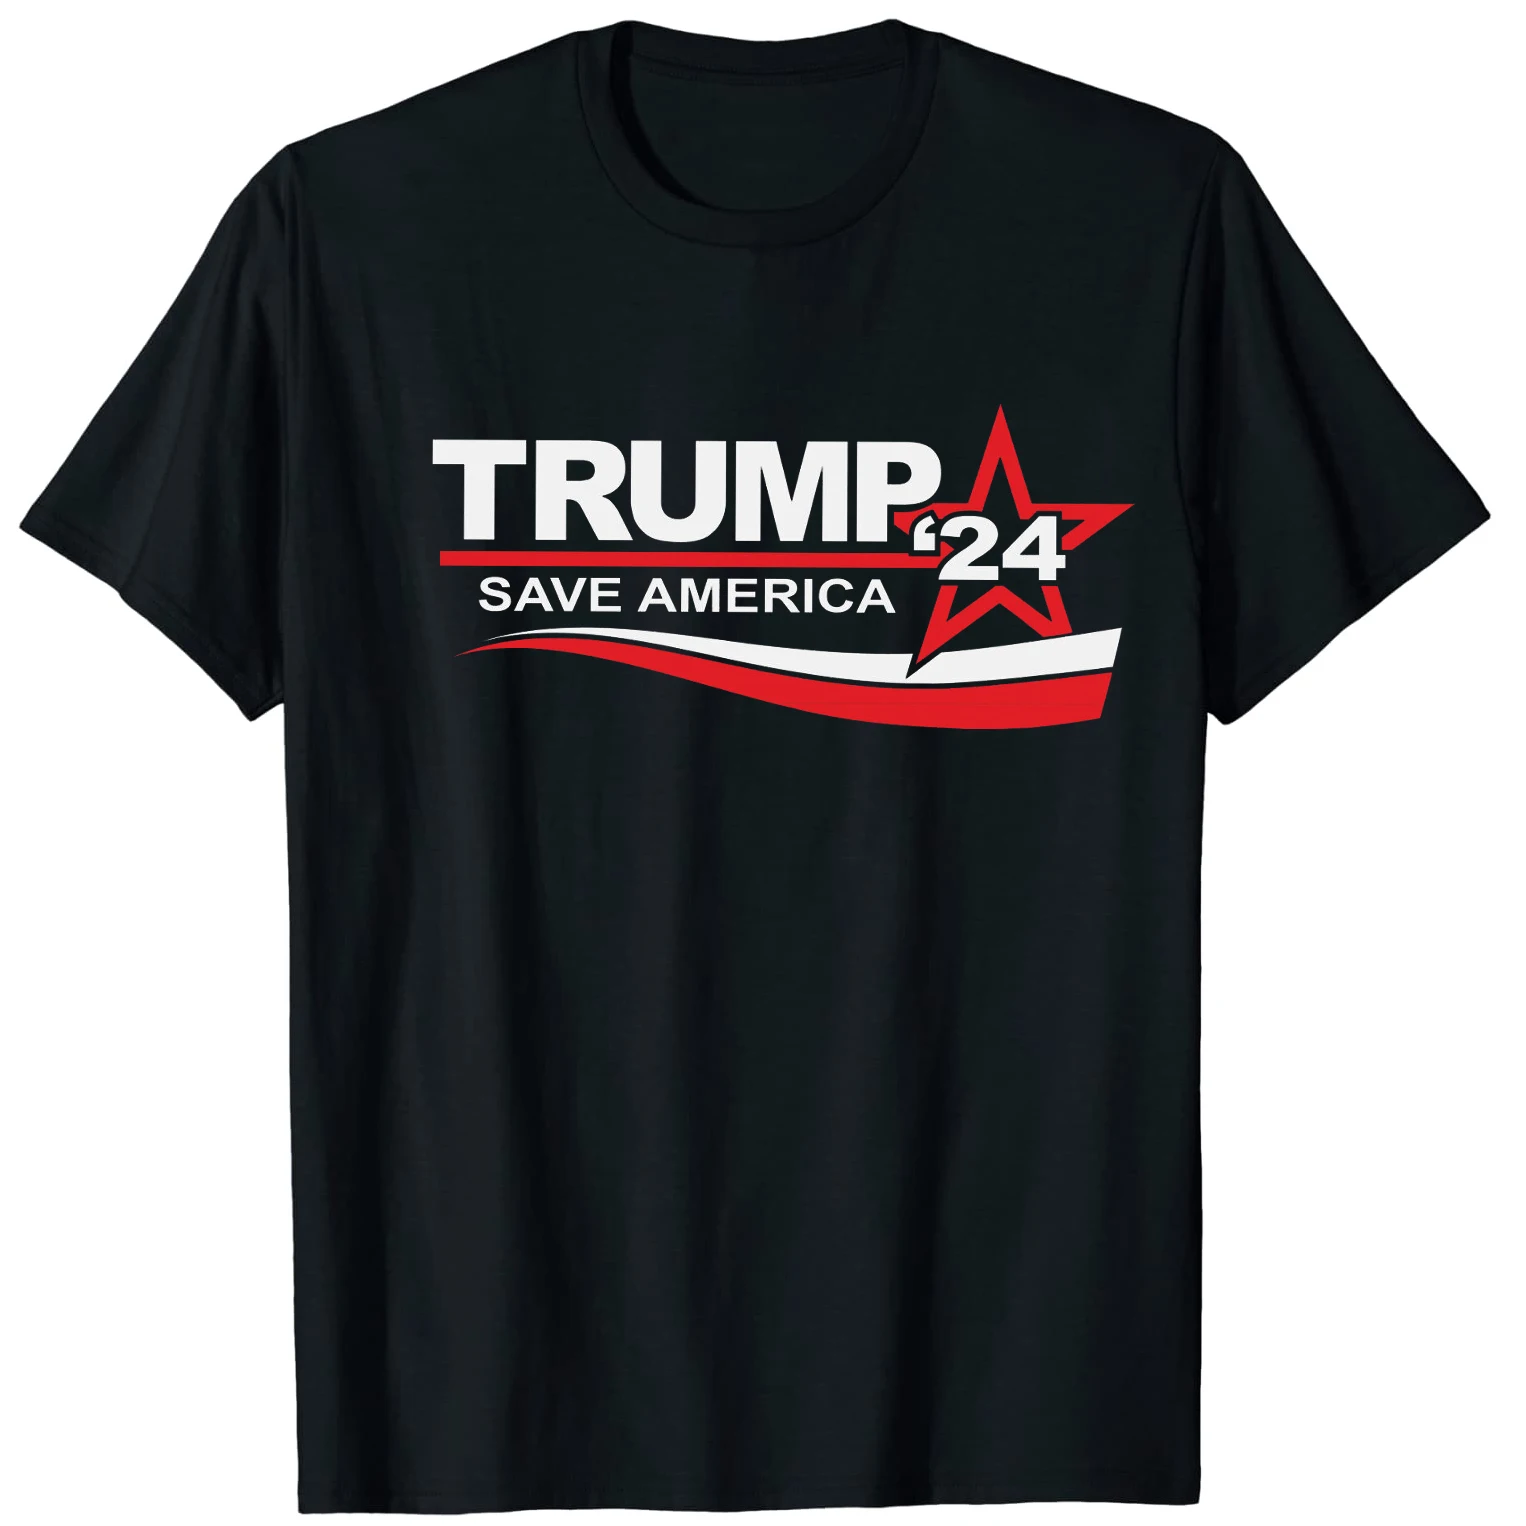 

Trump 2024 - Save America Patriotic Campaign MAGA Rally T-Shirt 100% Cotton O-Neck Short Sleeve Casual Mens T-shirt Size S-3XL